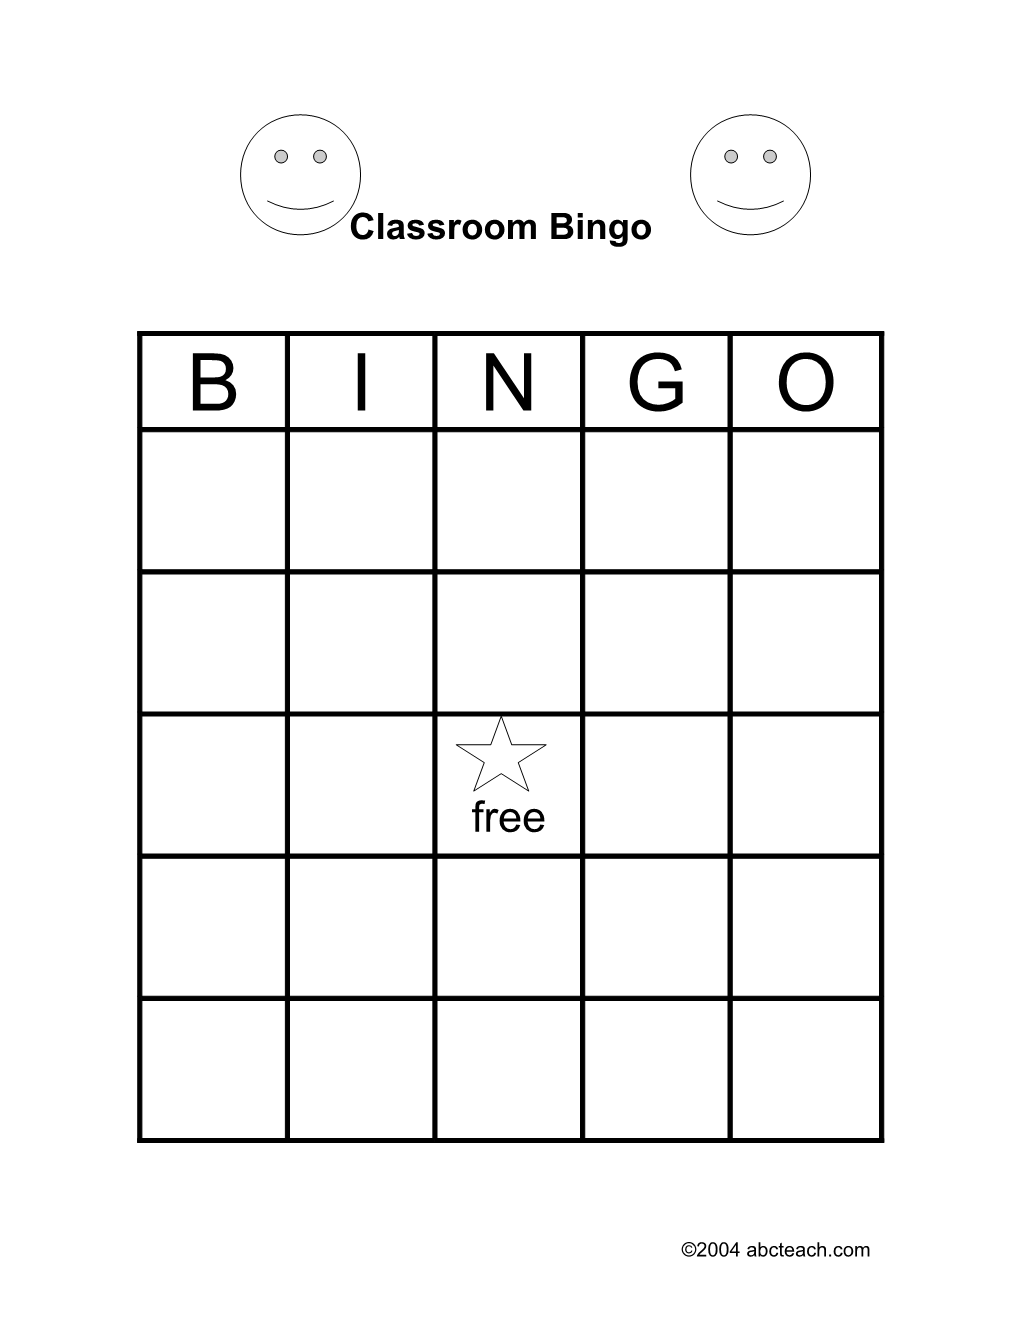 Give Each Student a Bingo Card